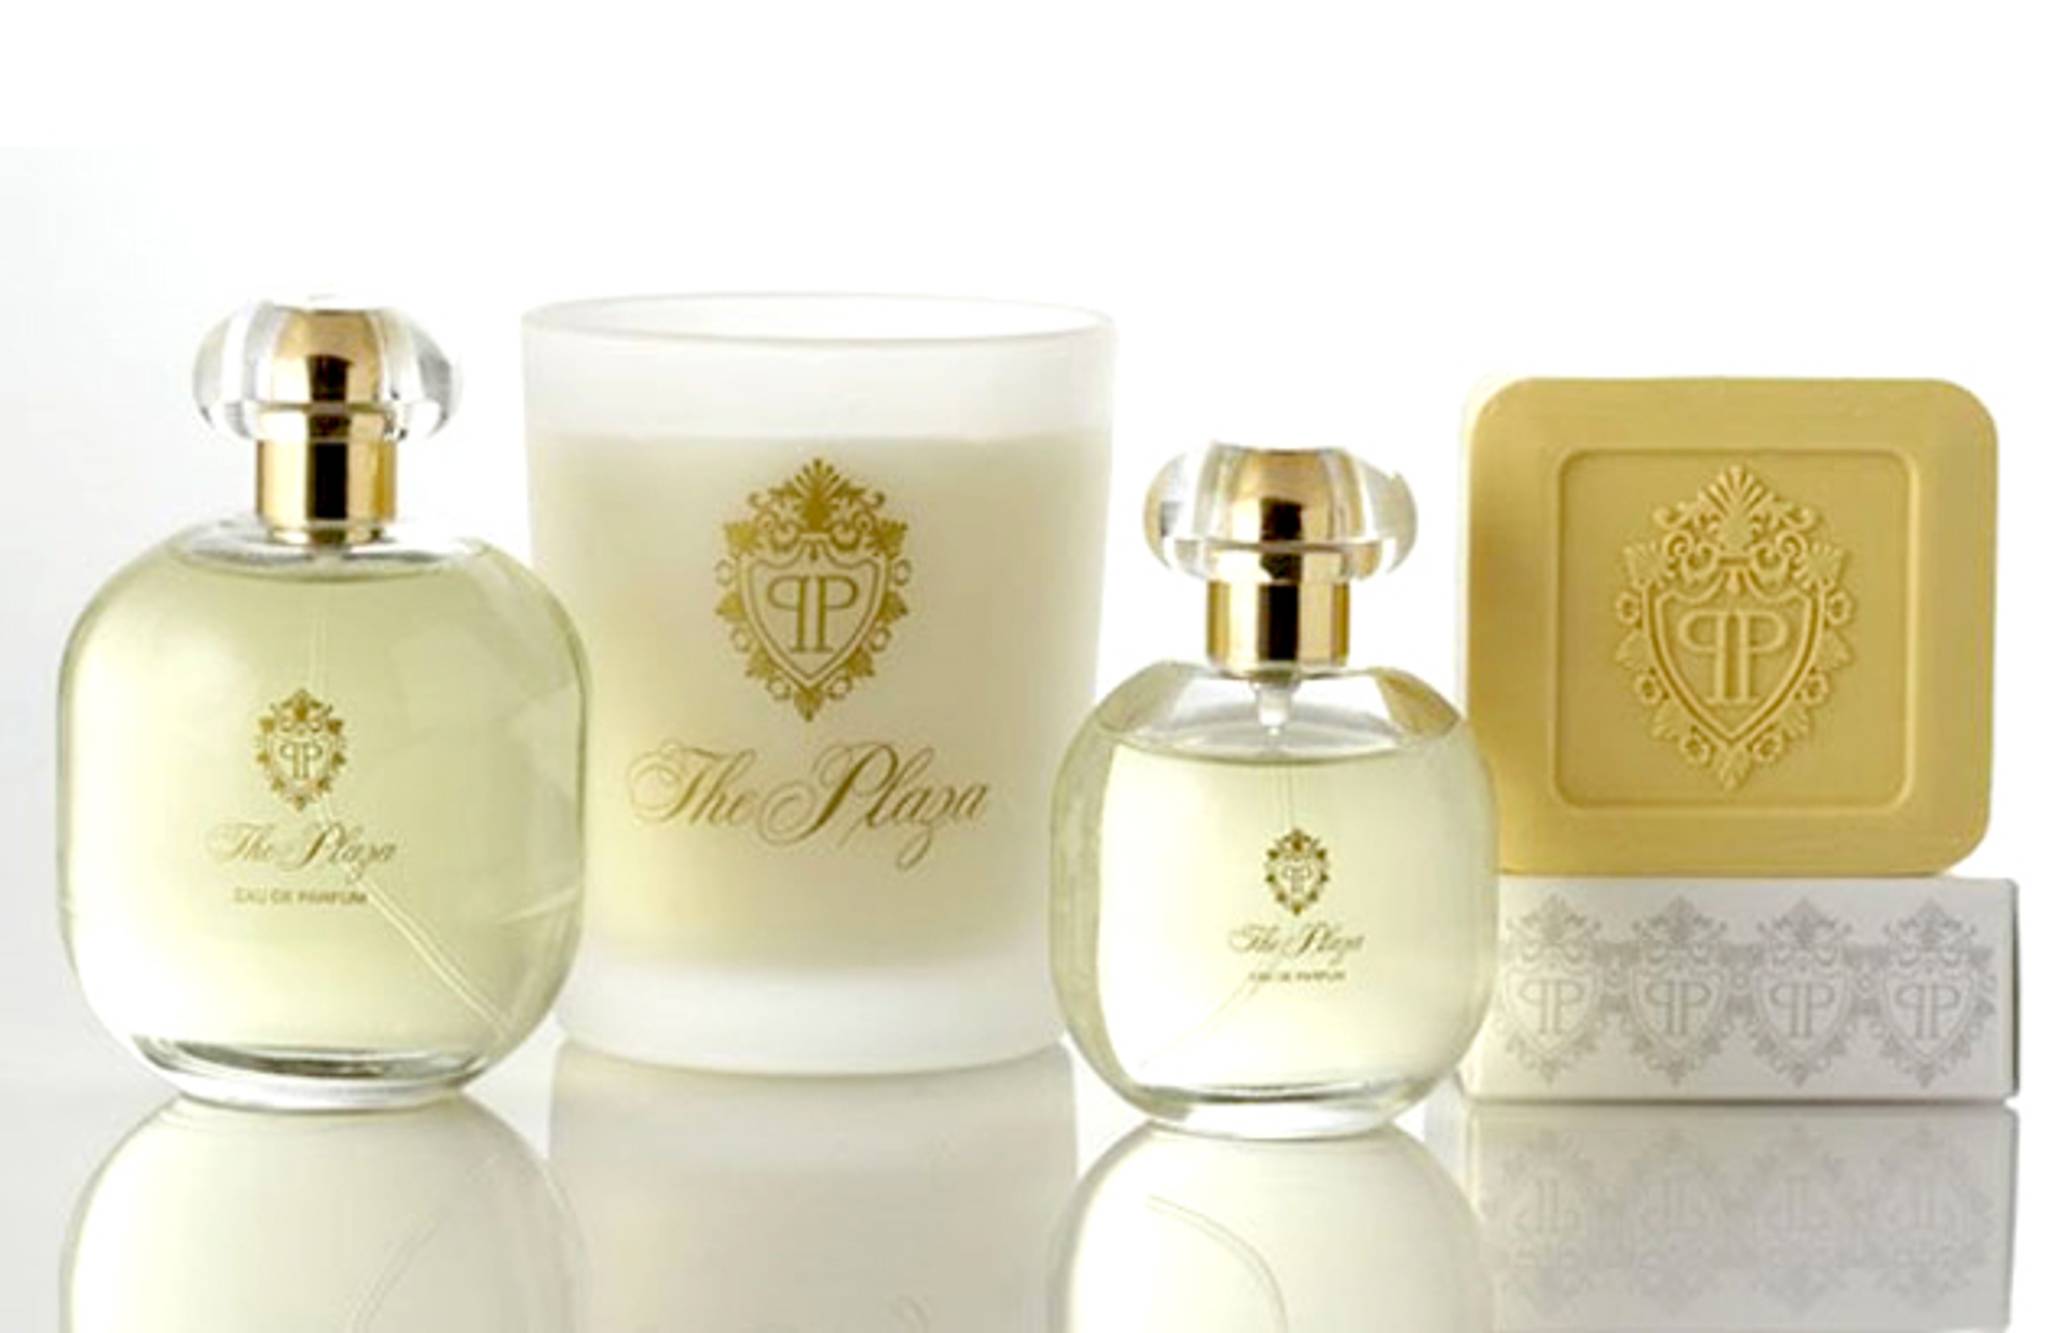 The Plaza's perfume